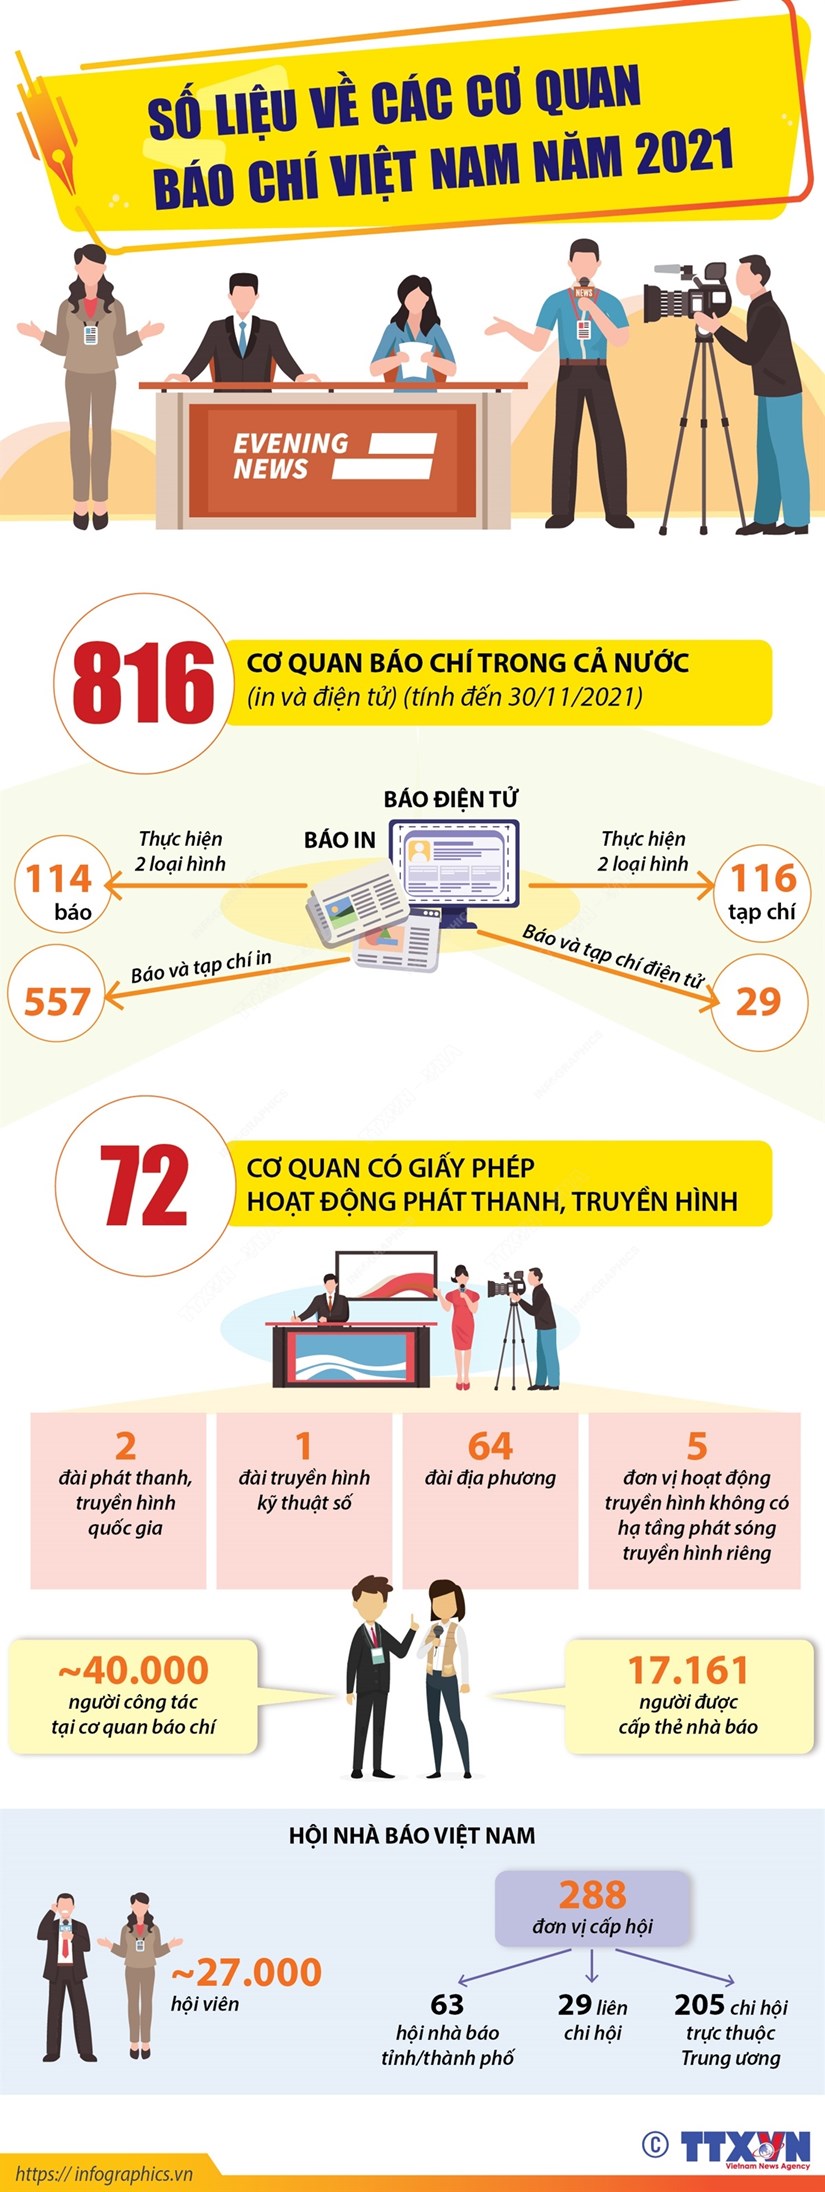 [Infographics] So lieu ve cac co quan bao chi Viet Nam nam 2021 hinh anh 1